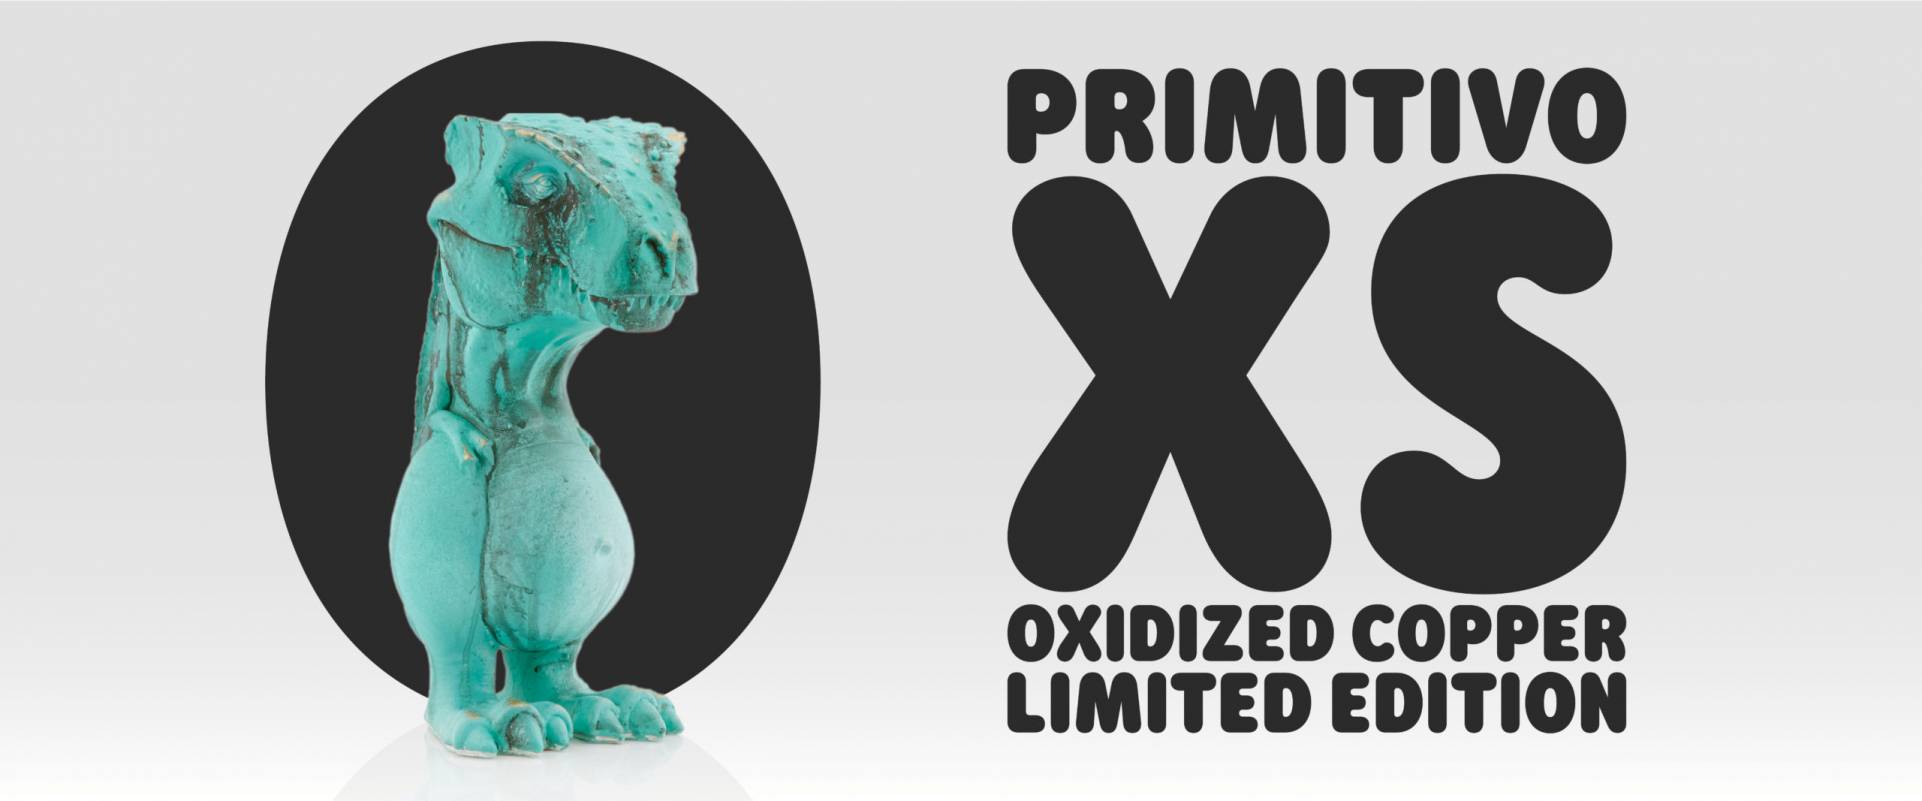 Primitivo XS limited edition